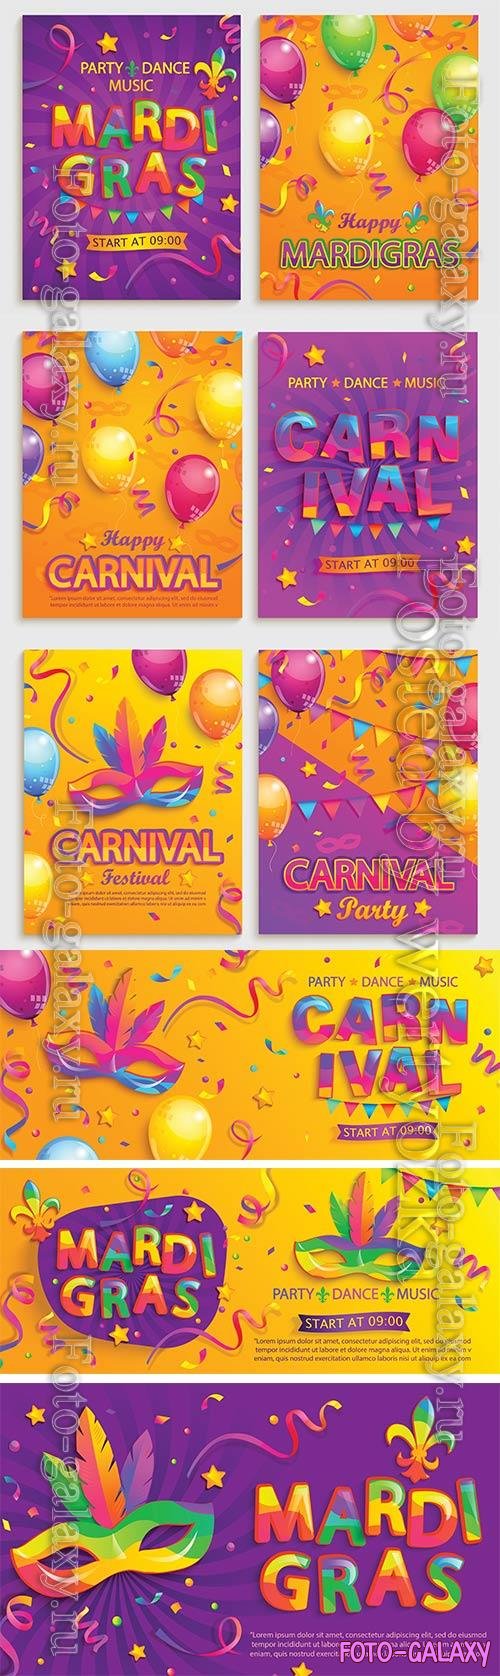 Mardi gras carnival poster, Venice carnival vector design vol 3